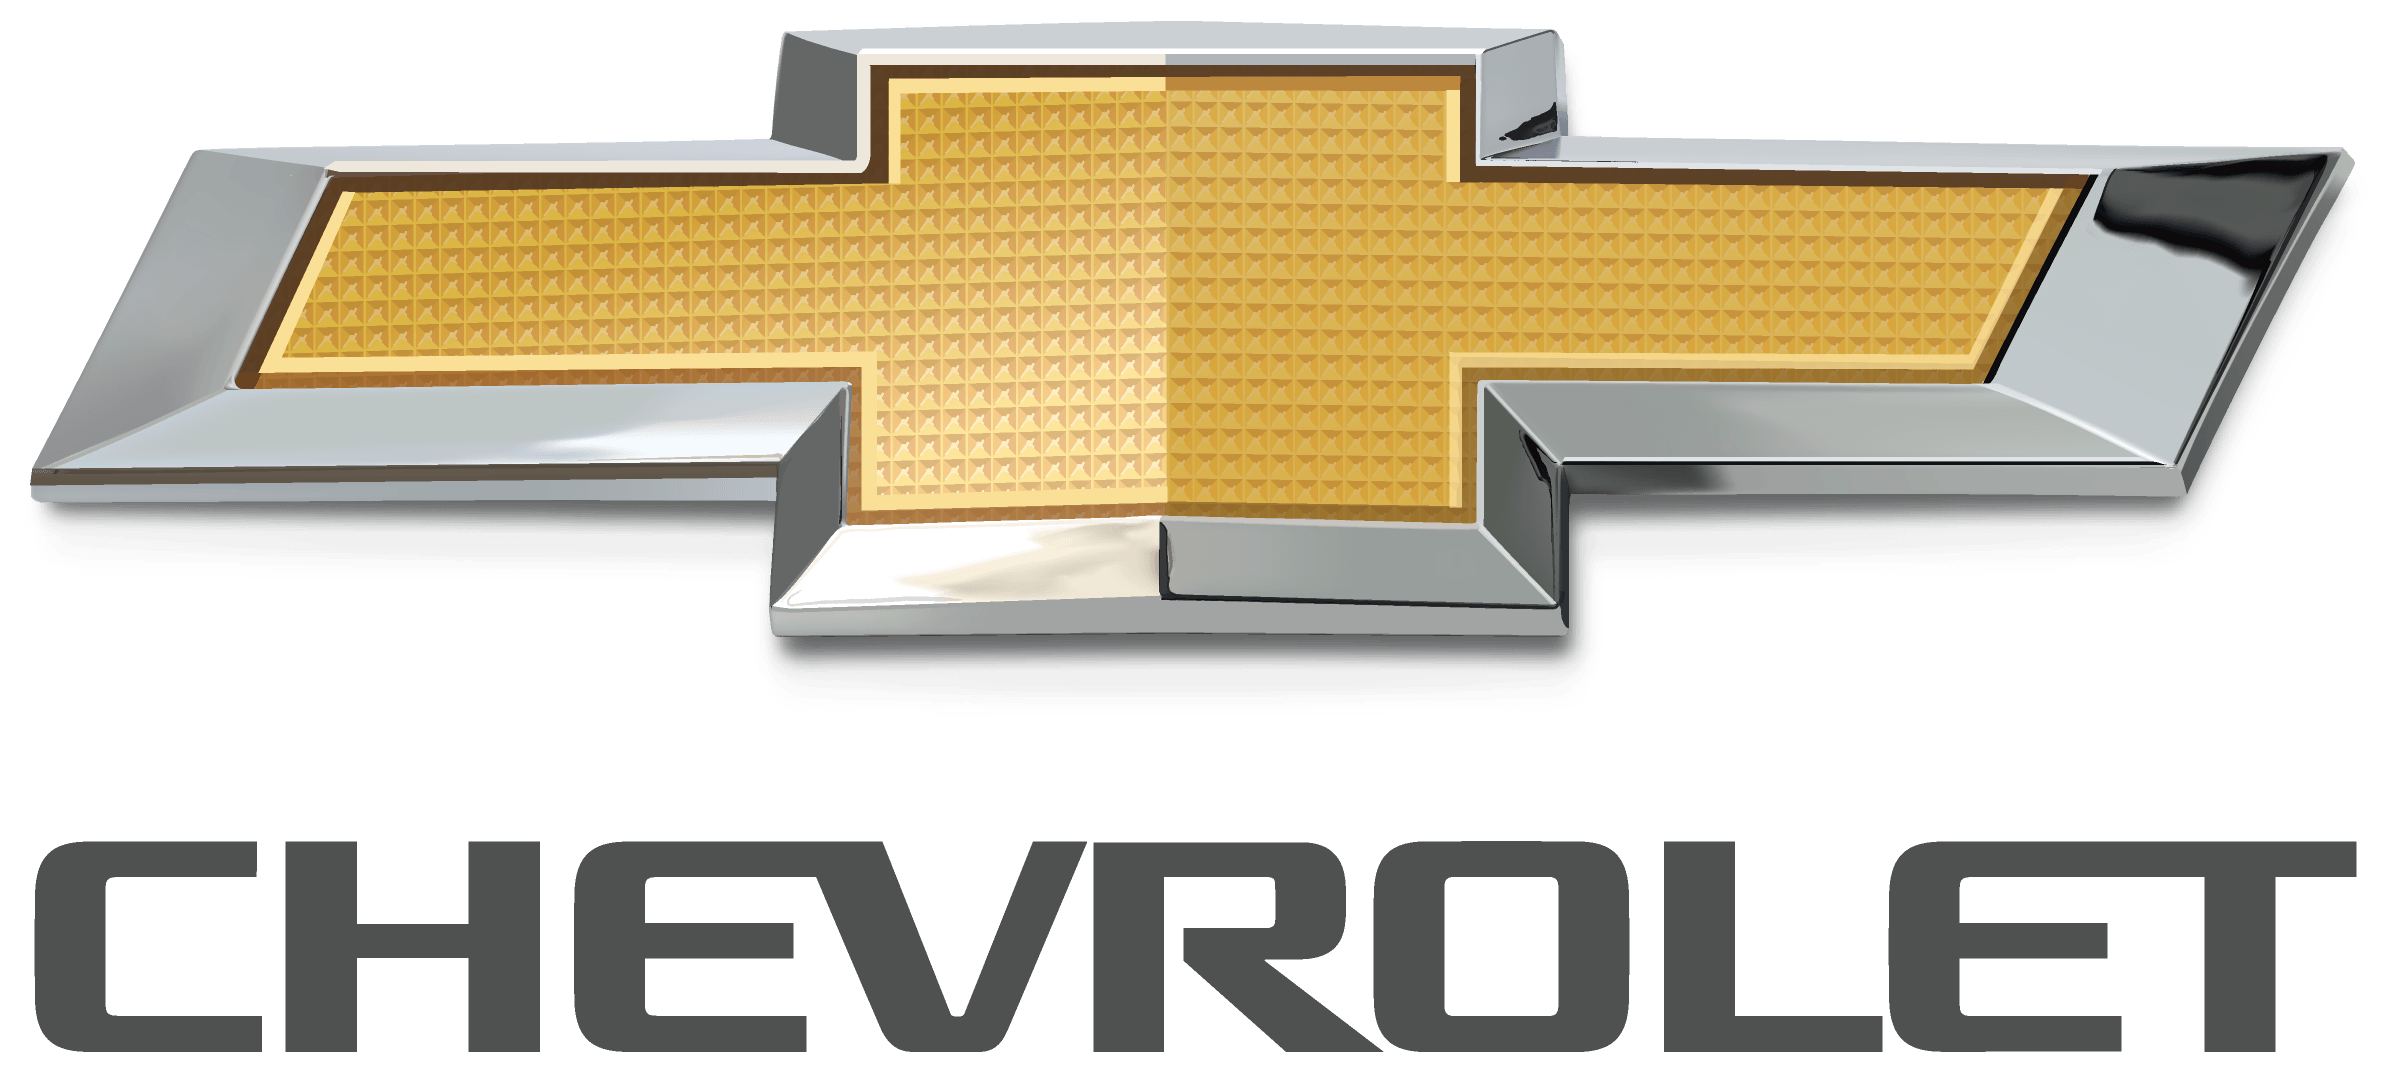 Chevrolet Logo   Chevy png